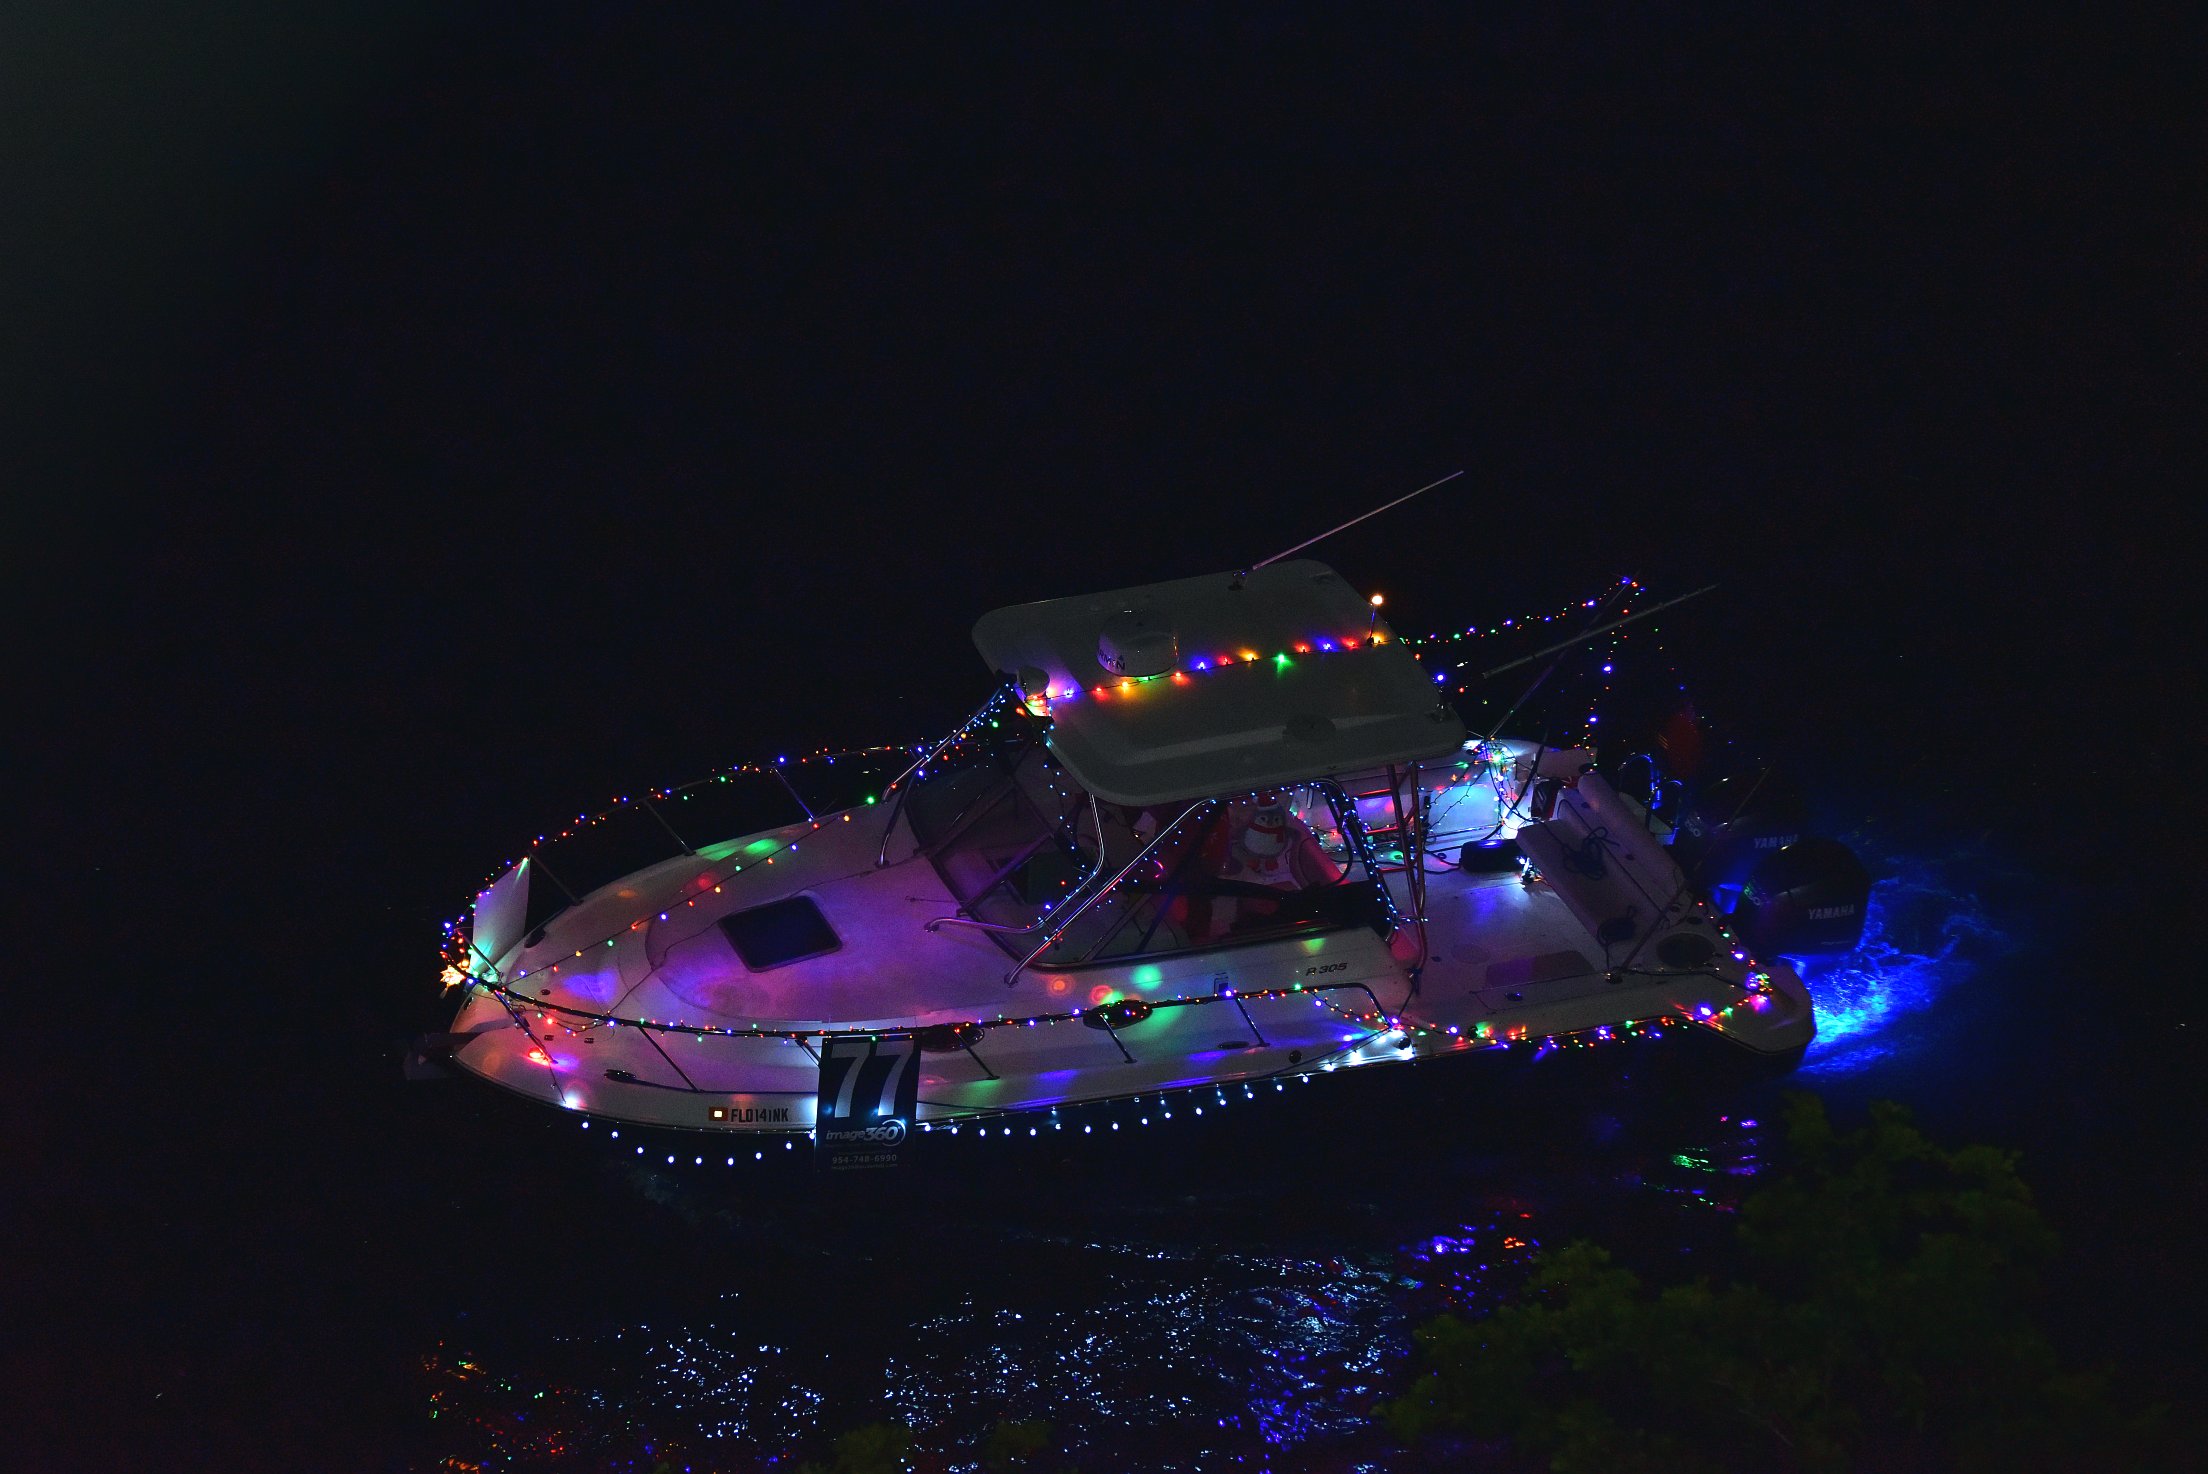 Aquarius, boat number 77 in the 2021 Winterfest Boat Parade